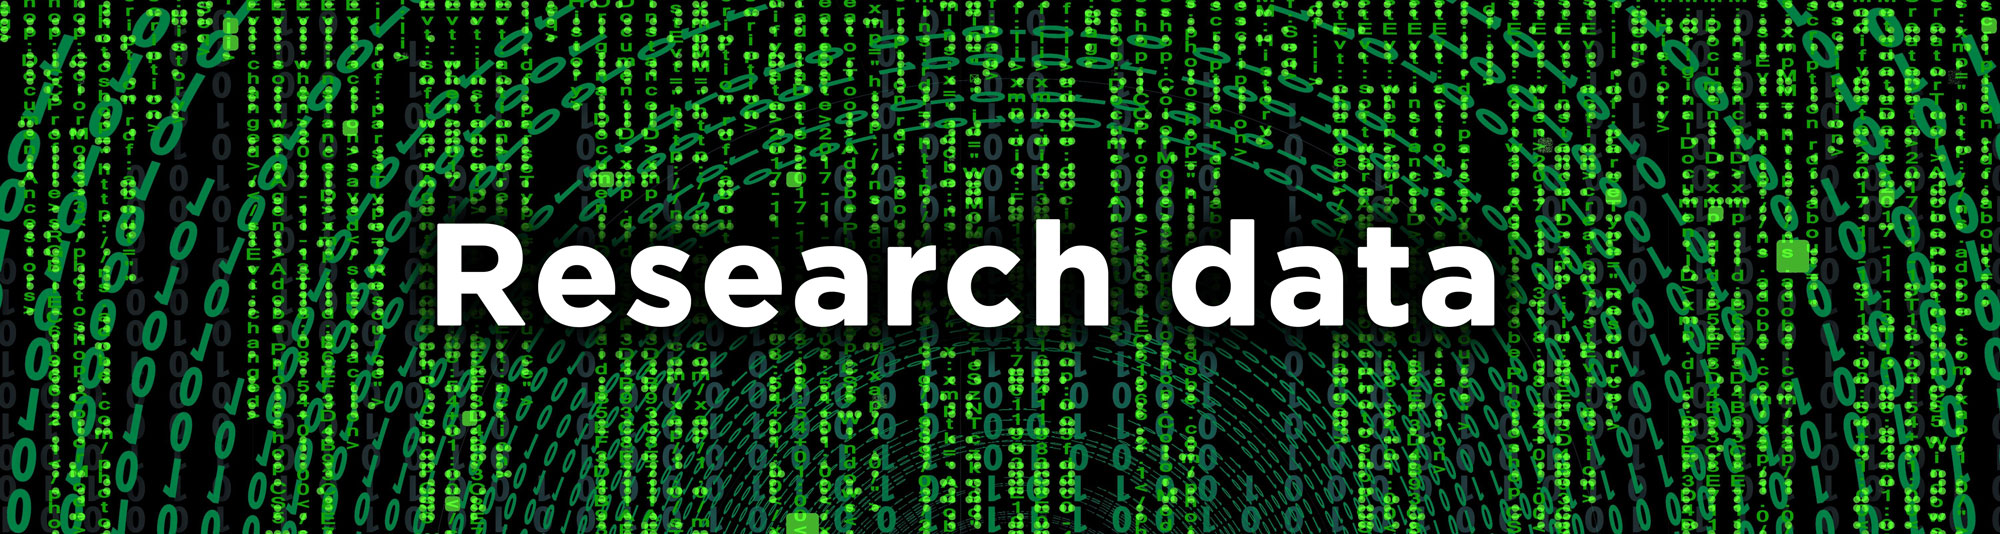 matrix-research-data